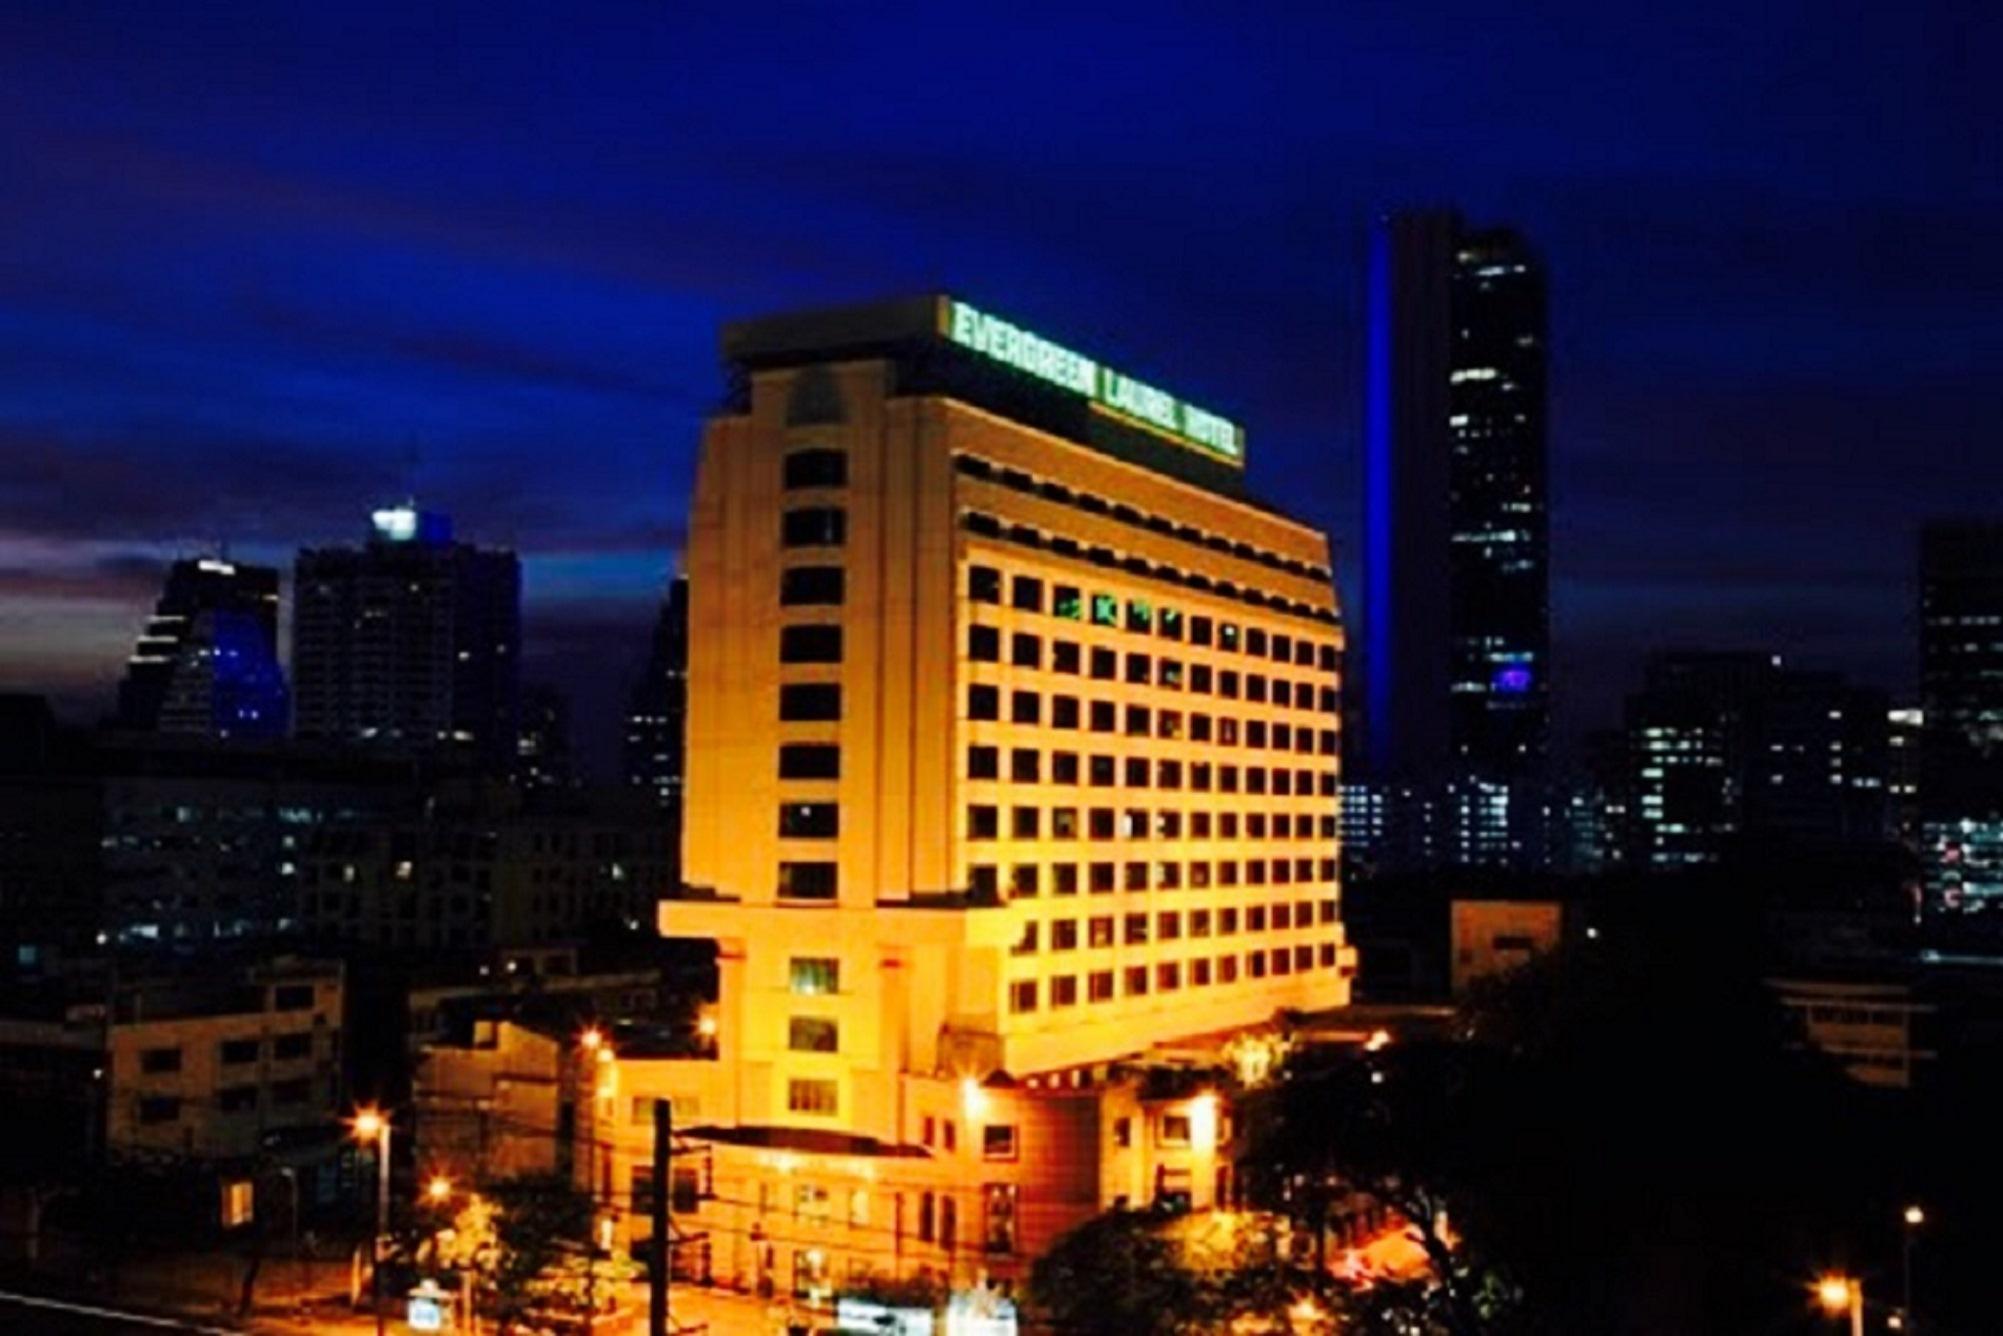 Evergreen Laurel Hotel Bangkok Exterior photo